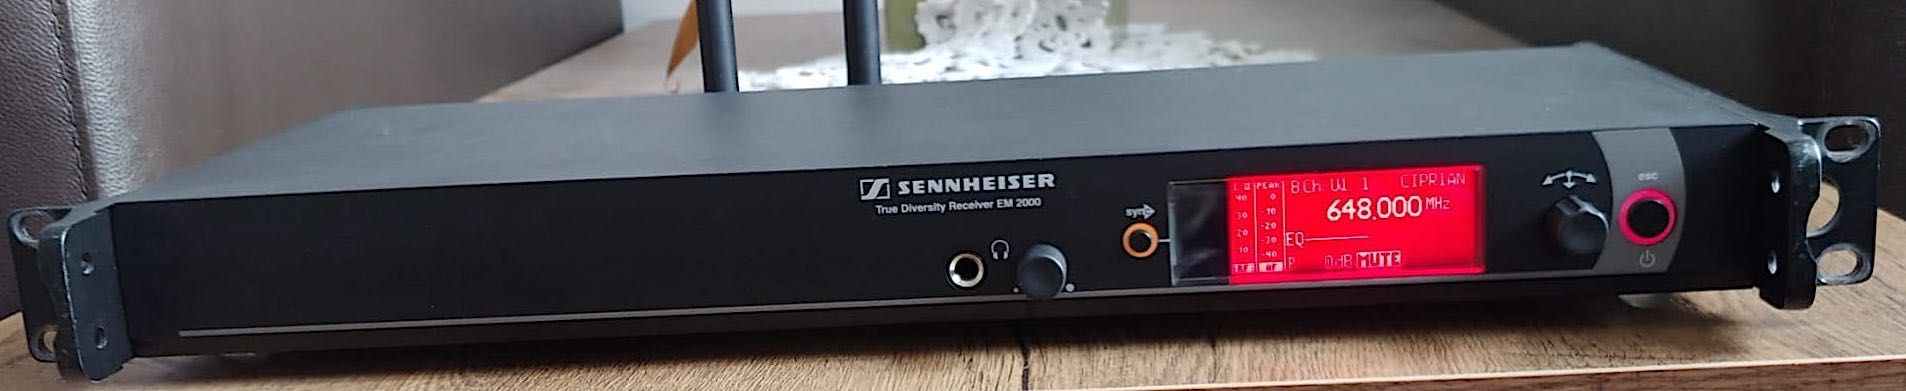 Sennheiser EM 2000 True Diversity Receiver 606-678 MHz